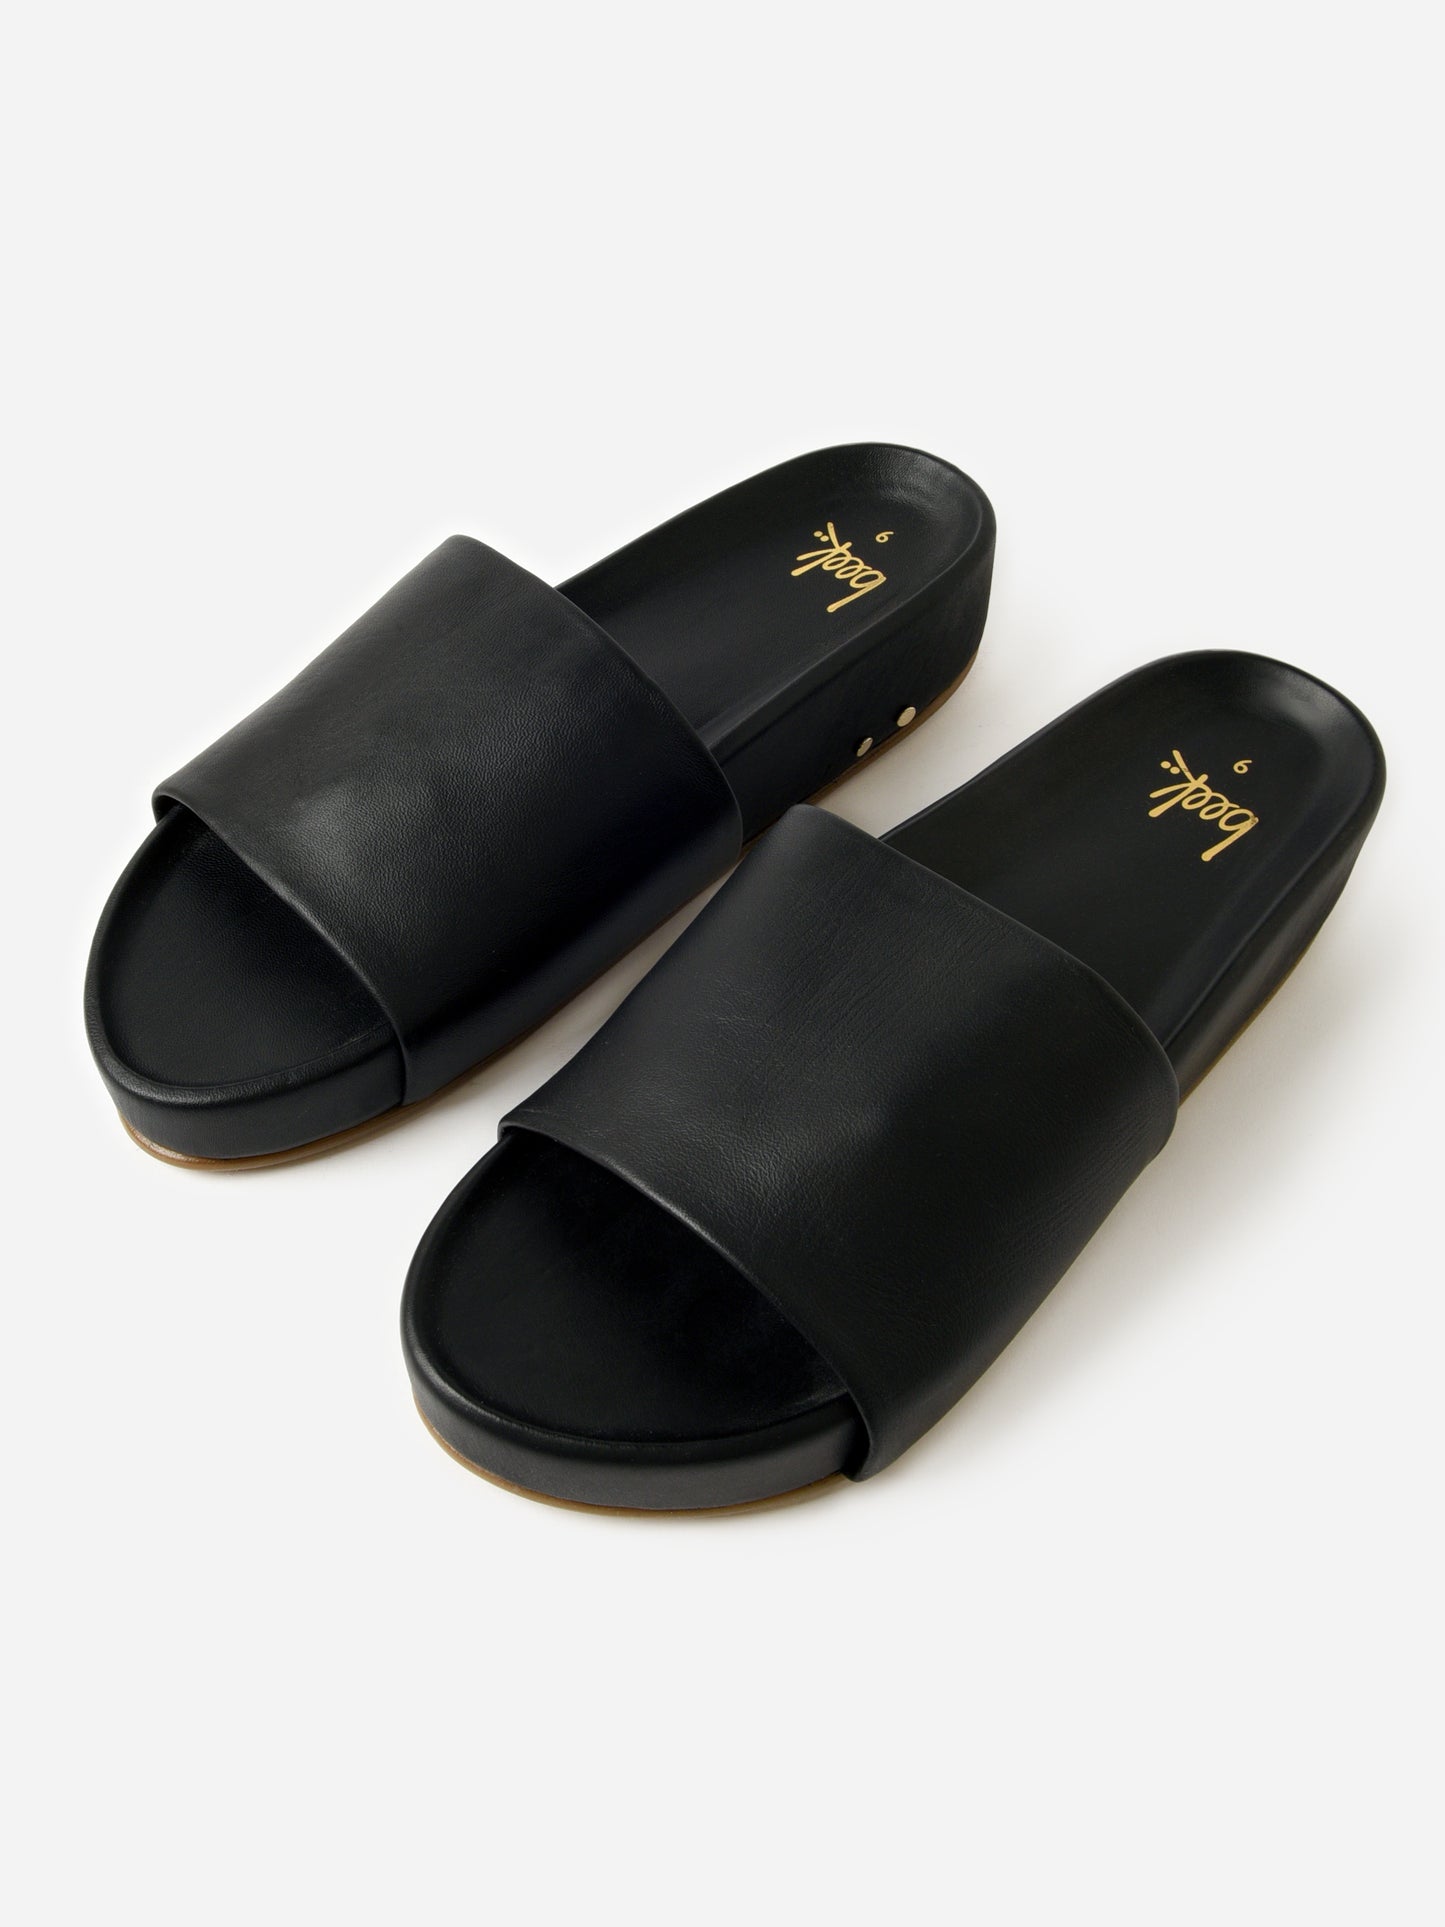 Beek Women's Pelican Leather Platform Sandal